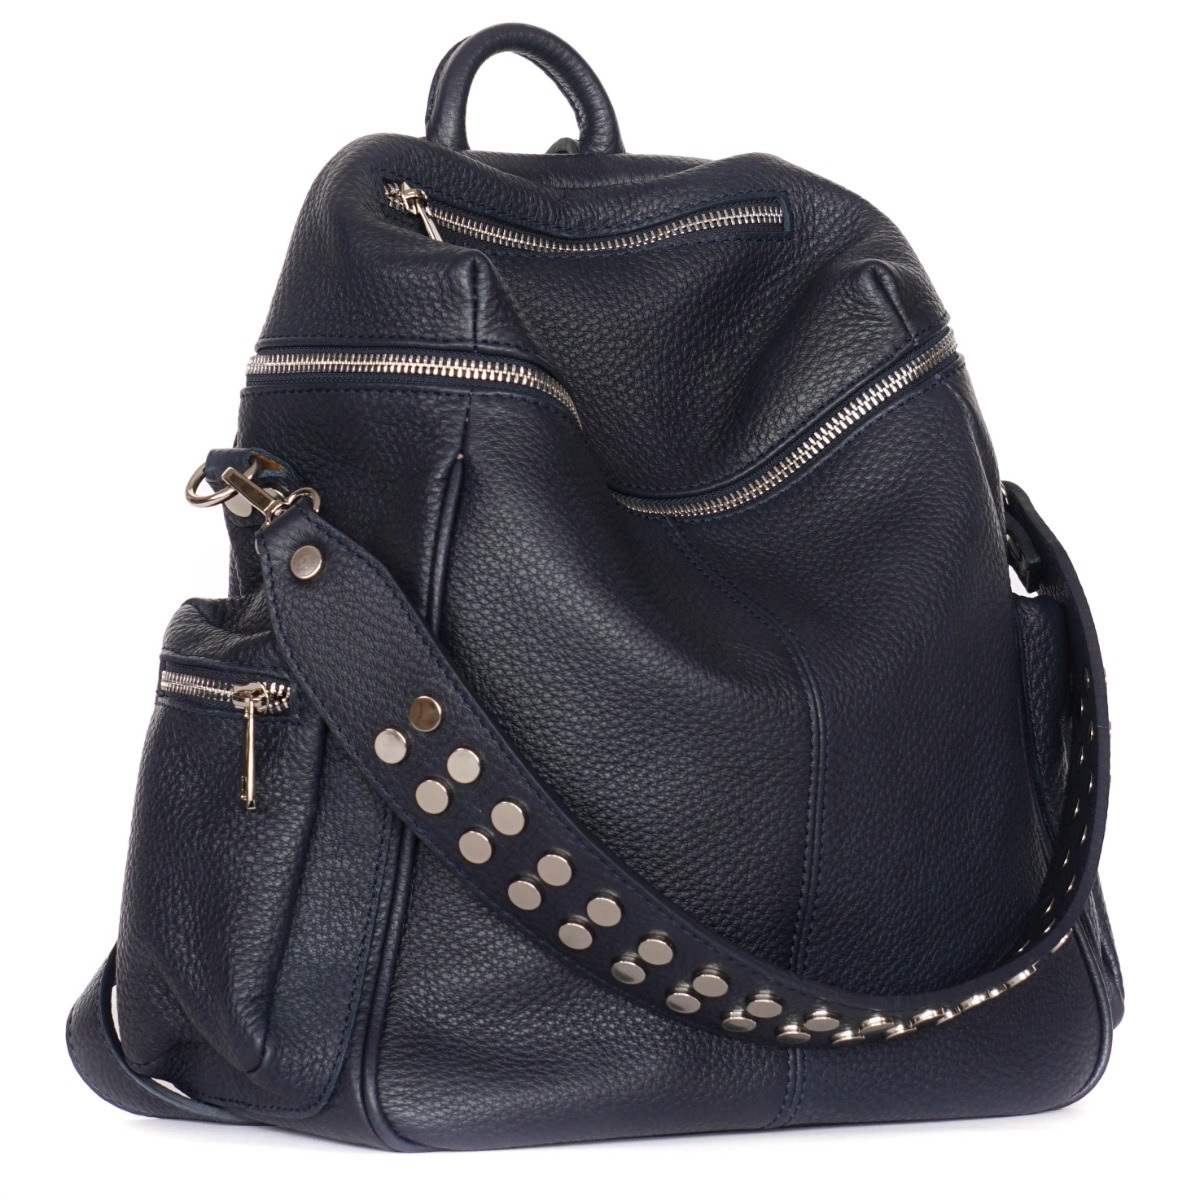 Dark blue hobo backpack bag leather